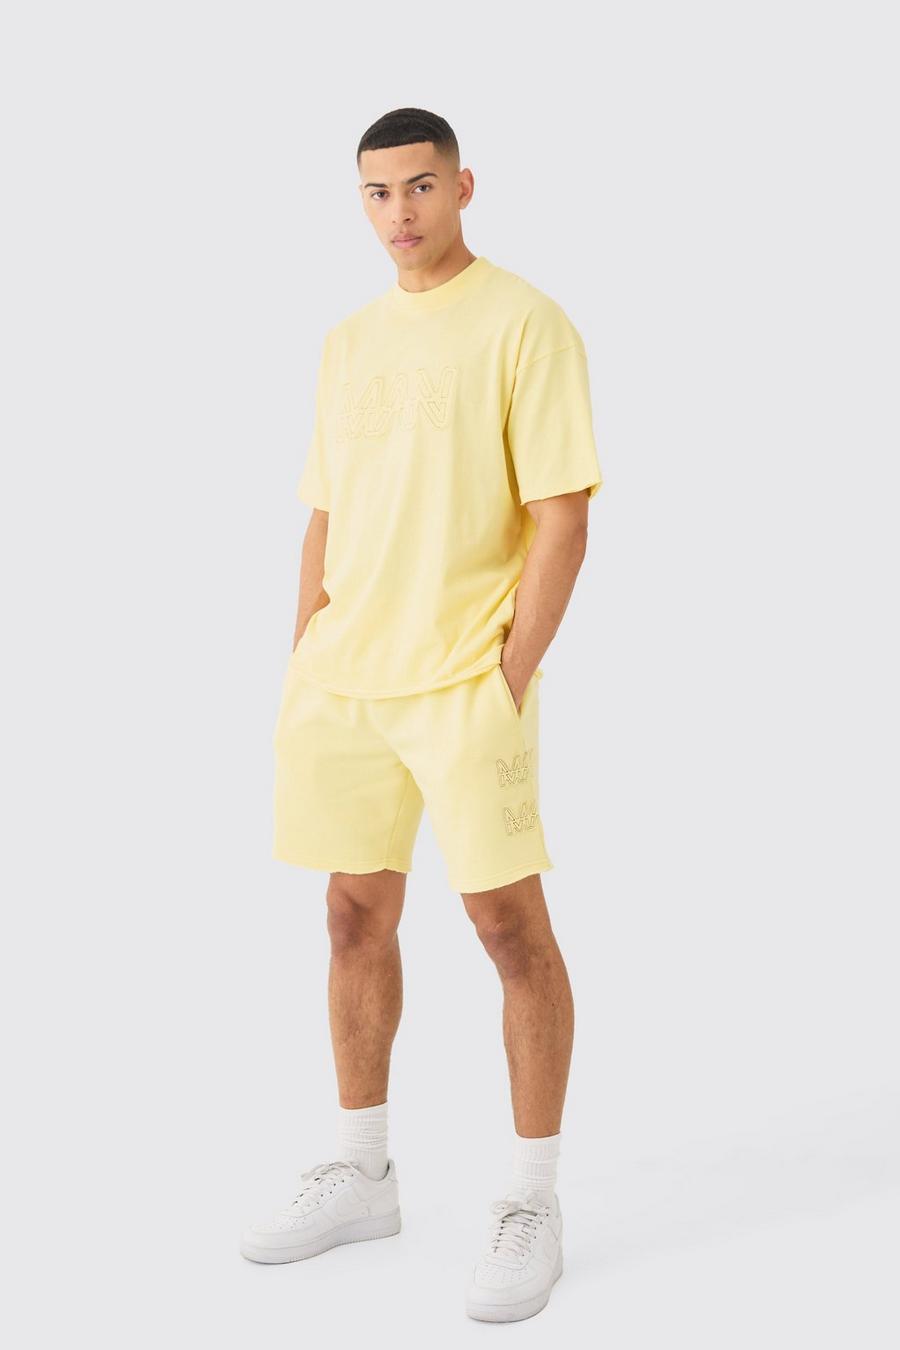 Kastiges zerrissenes Man T-Shirt & Shorts, Yellow